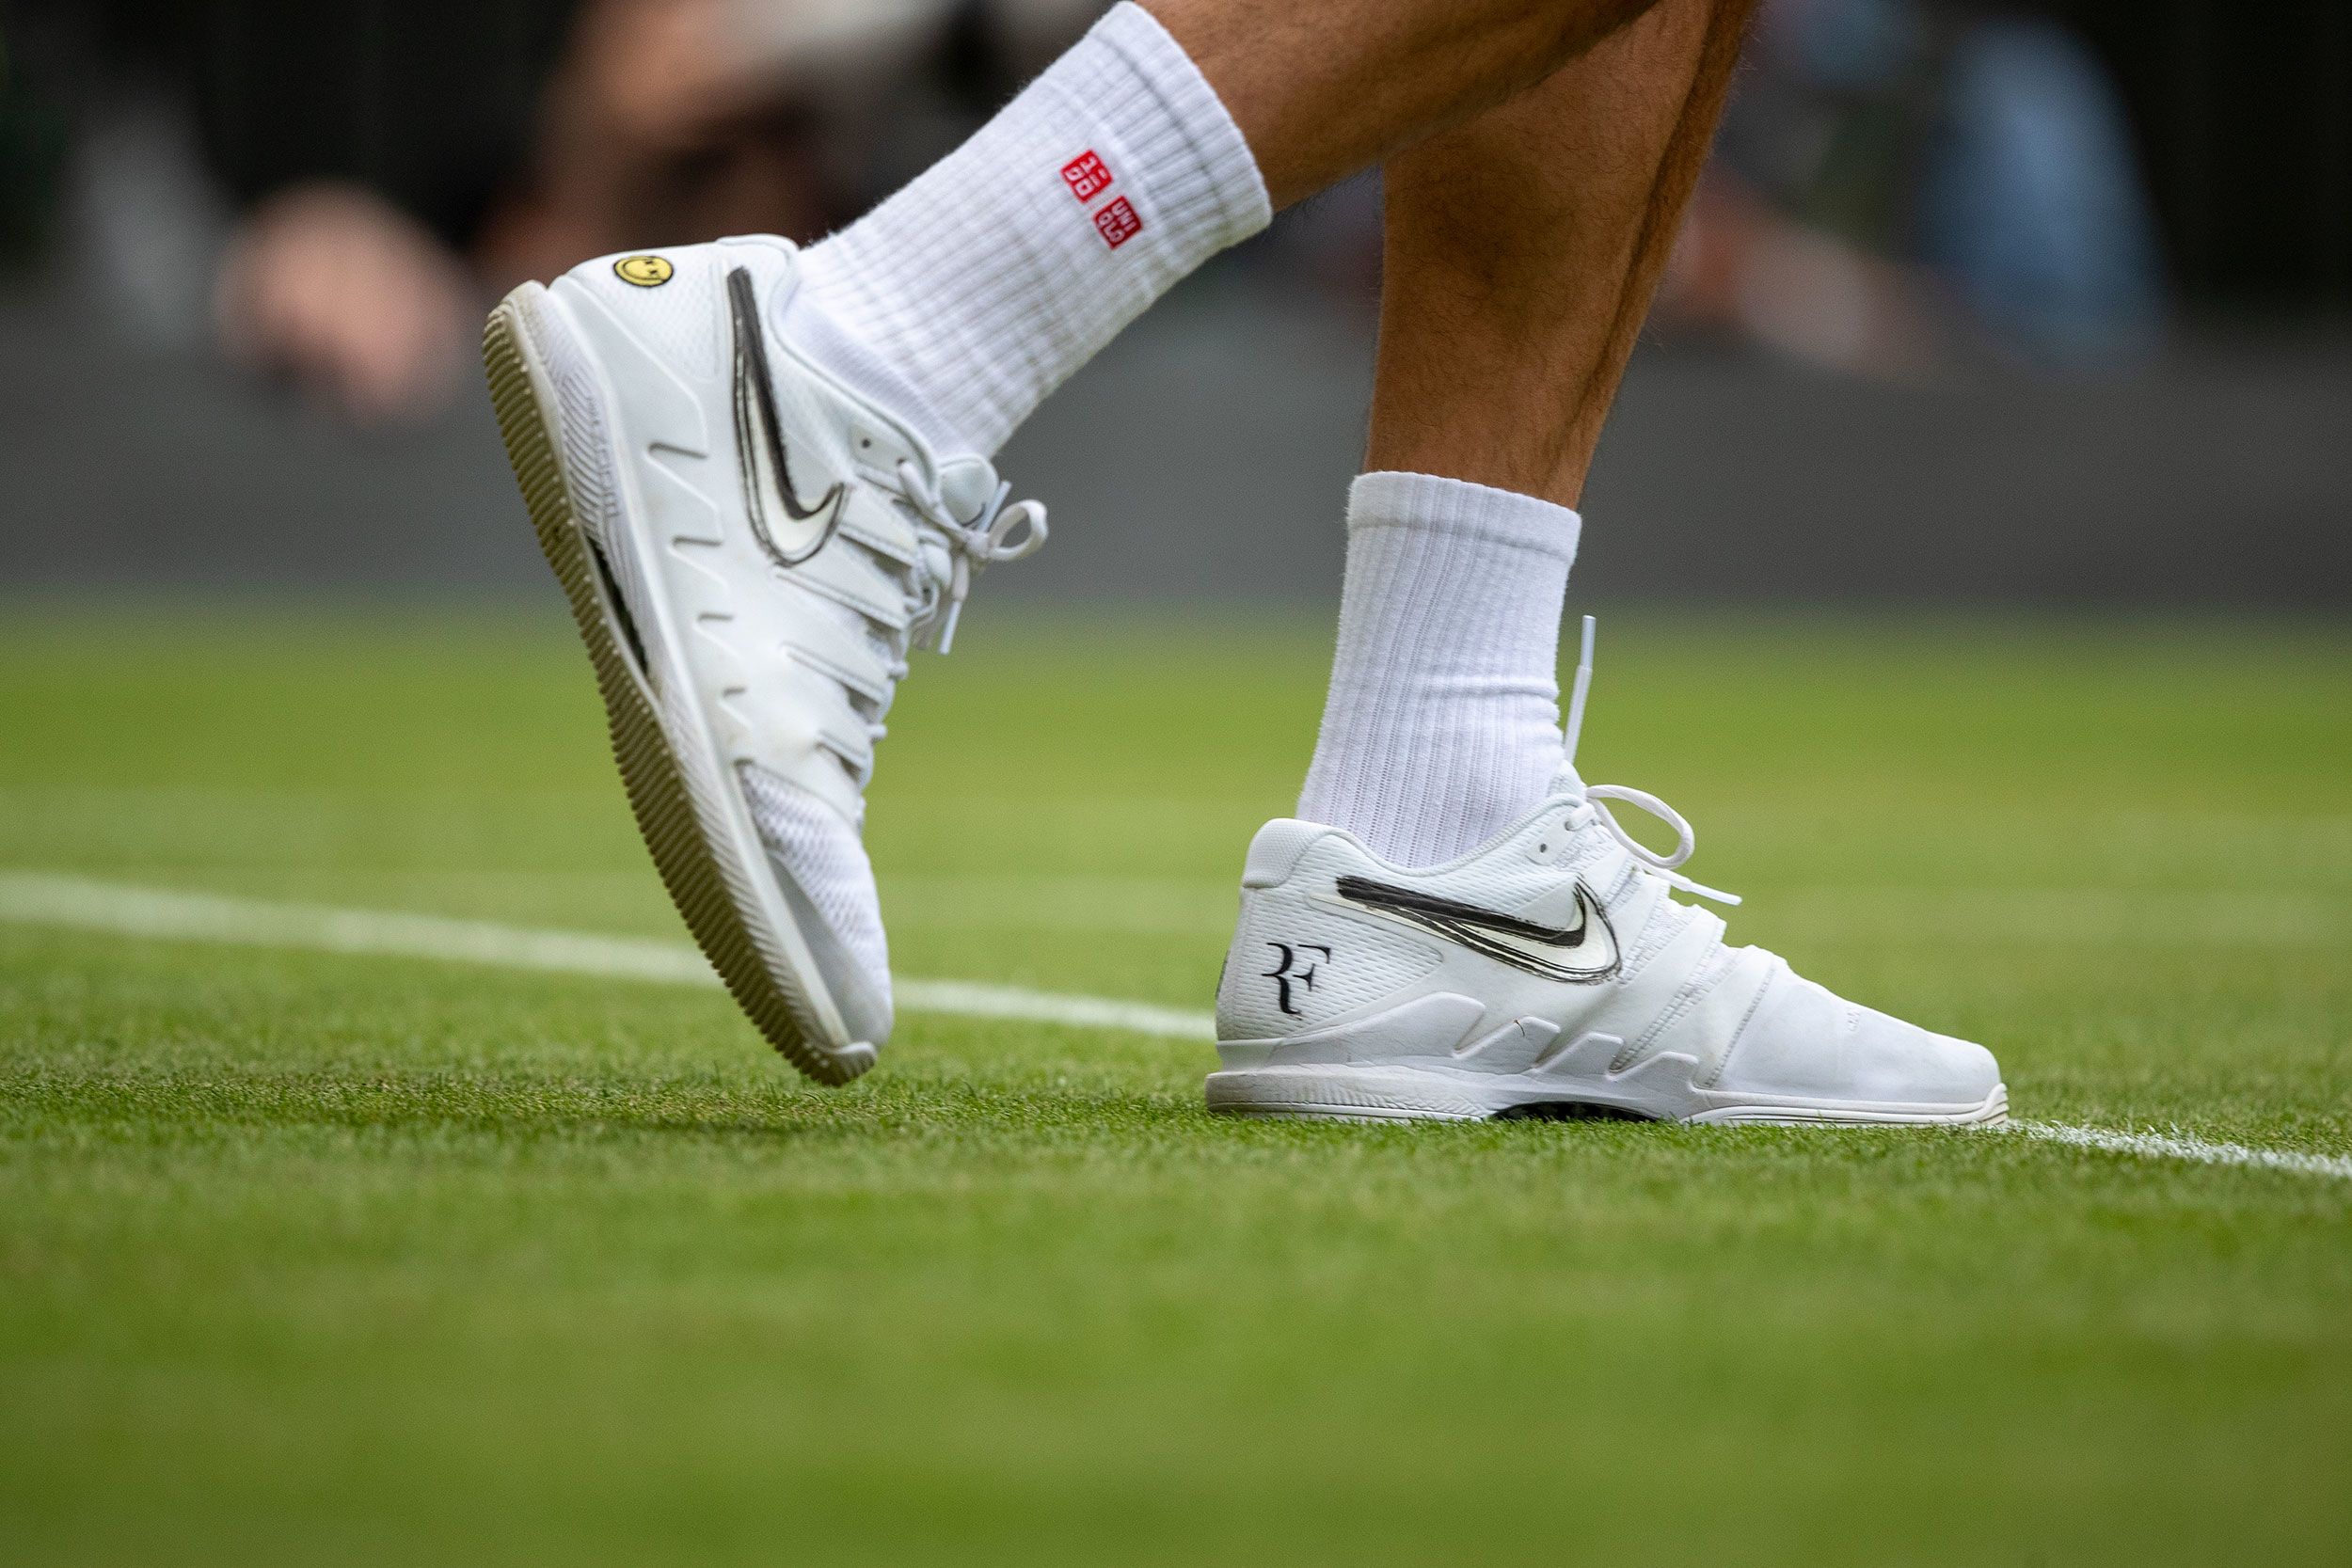 Roger Federer: Letting Swiss star Nike for Uniqlo an 'atrocity,' says former Nike director | CNN